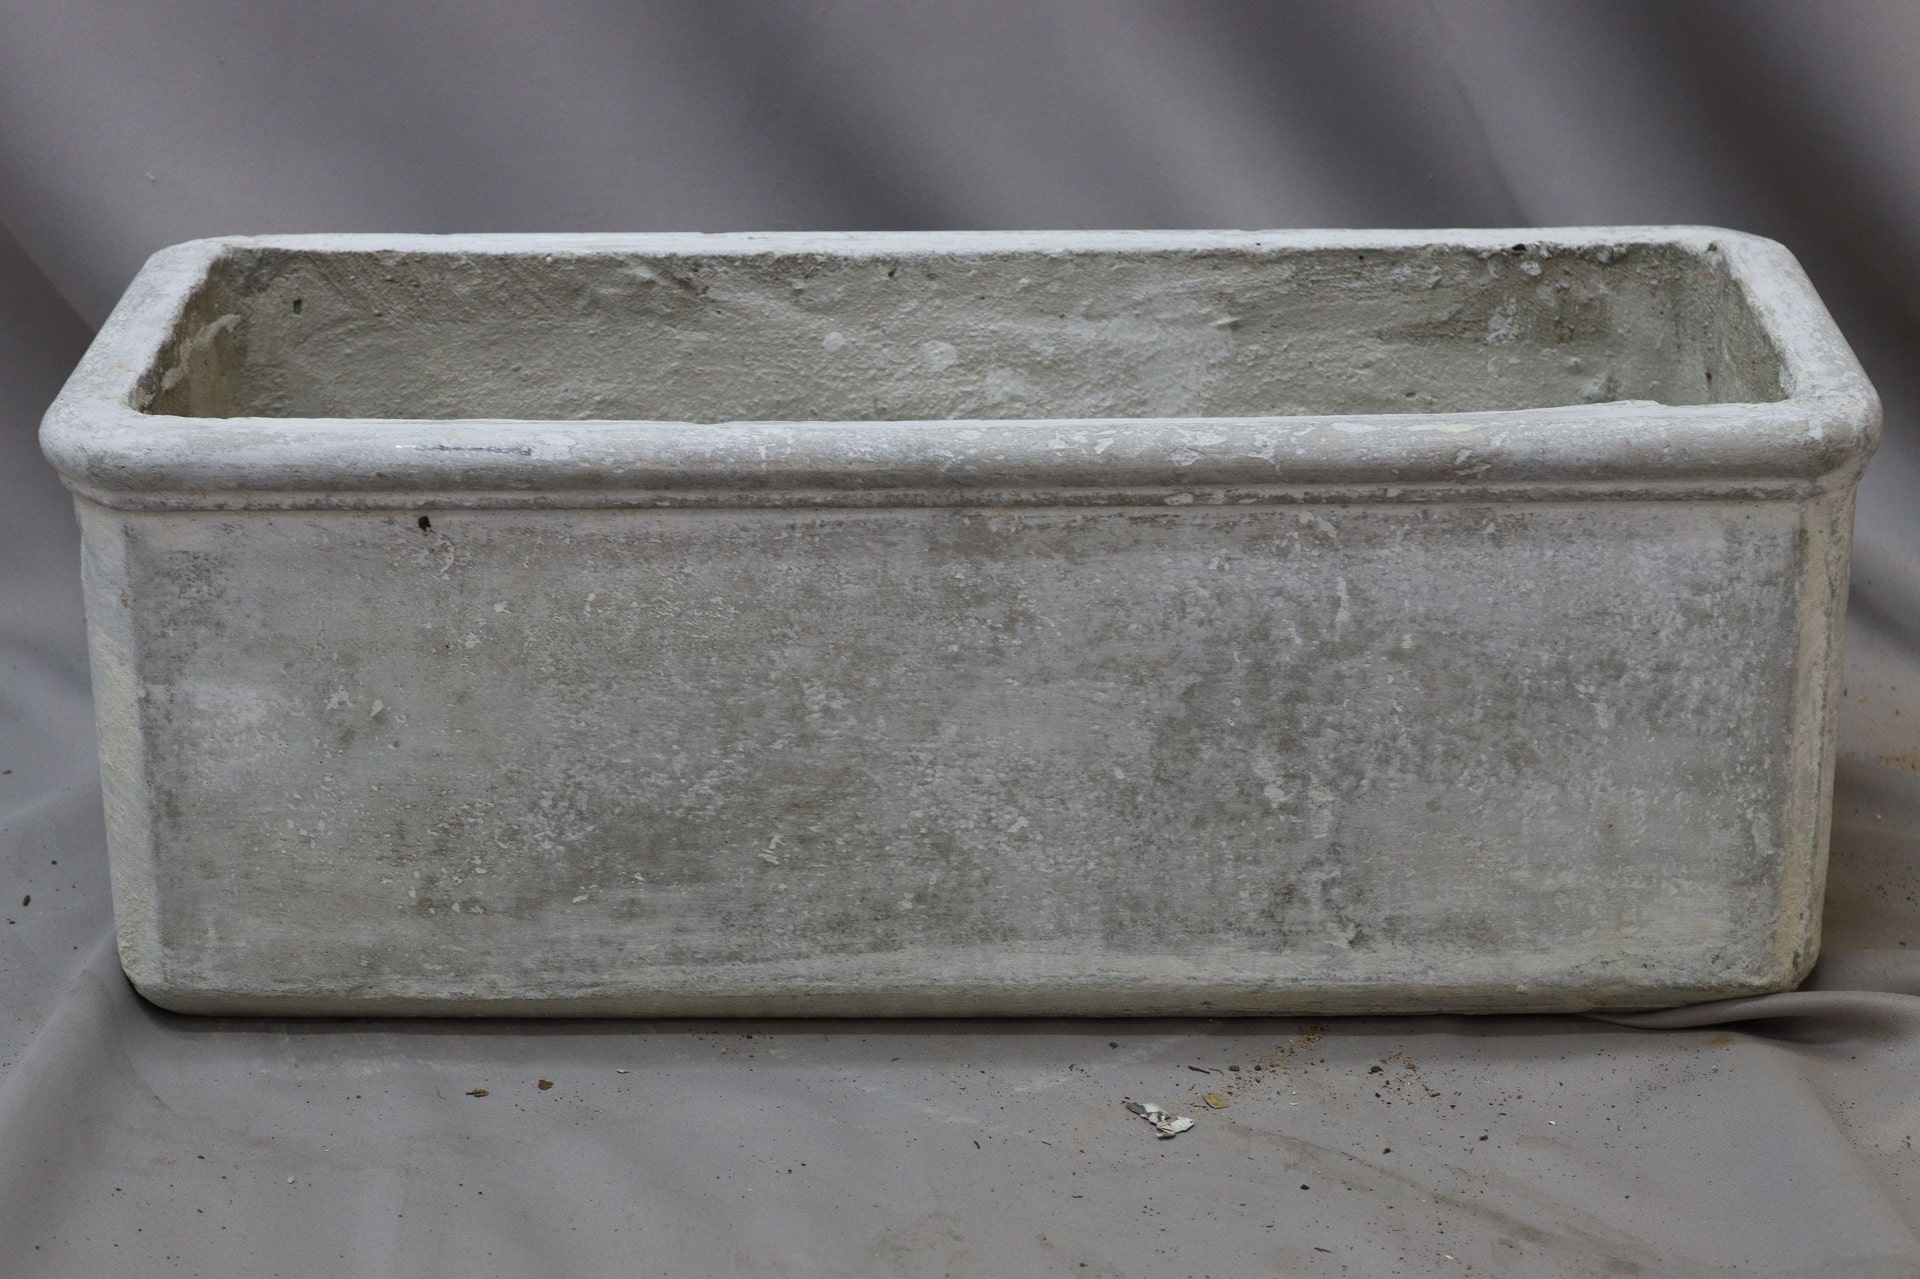 Rectangular grey concrete planter against a grey background.